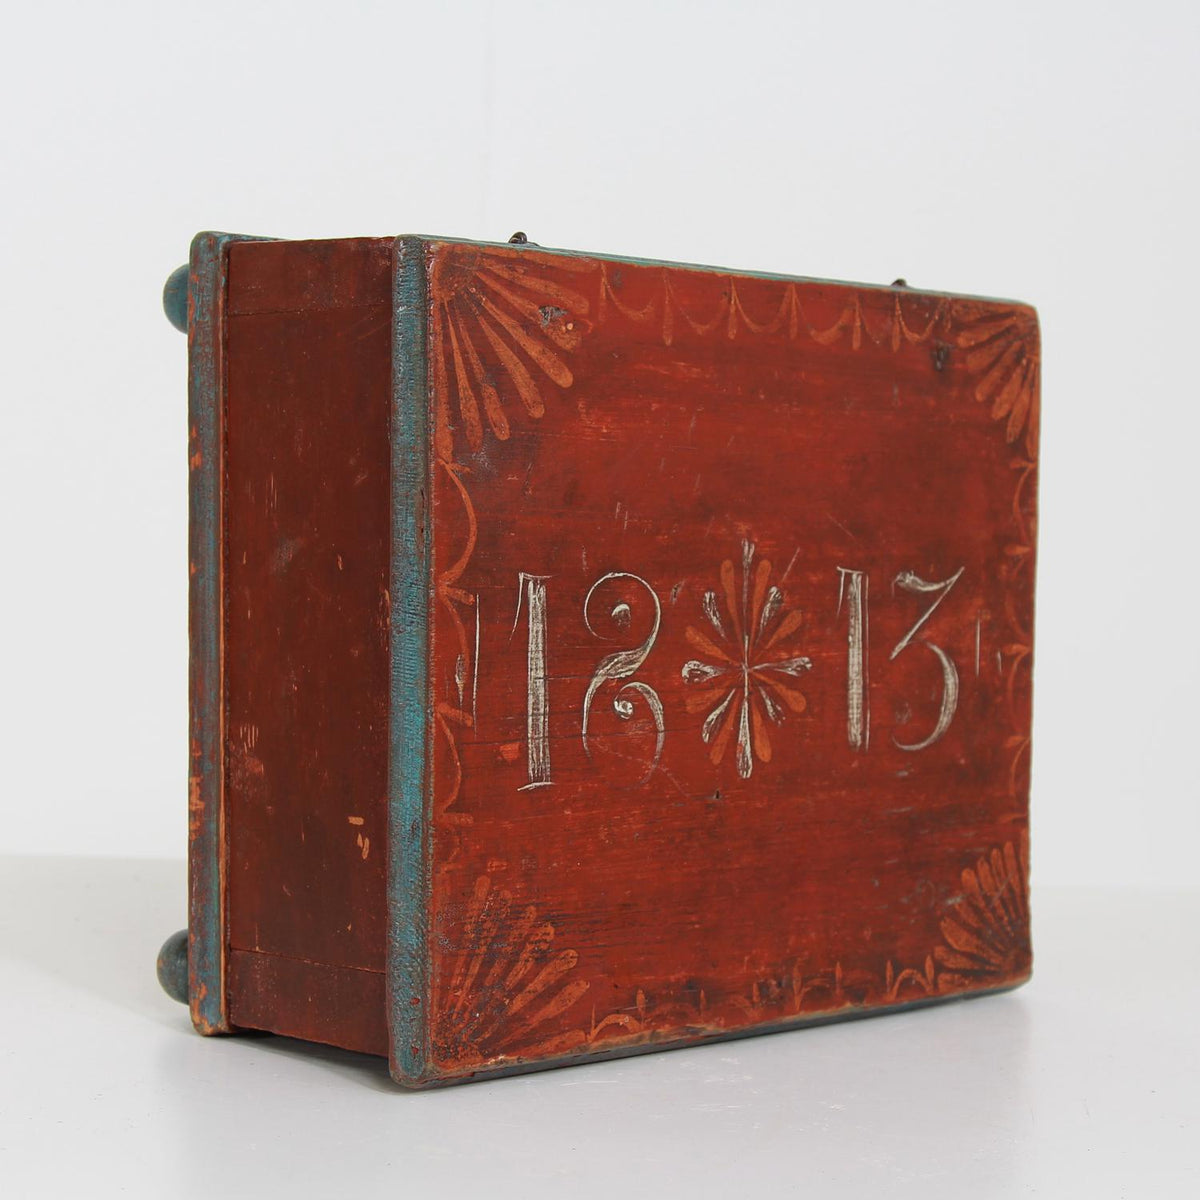 Early Swedish 19th Century Wooden Folk Art Box  Dated 1813